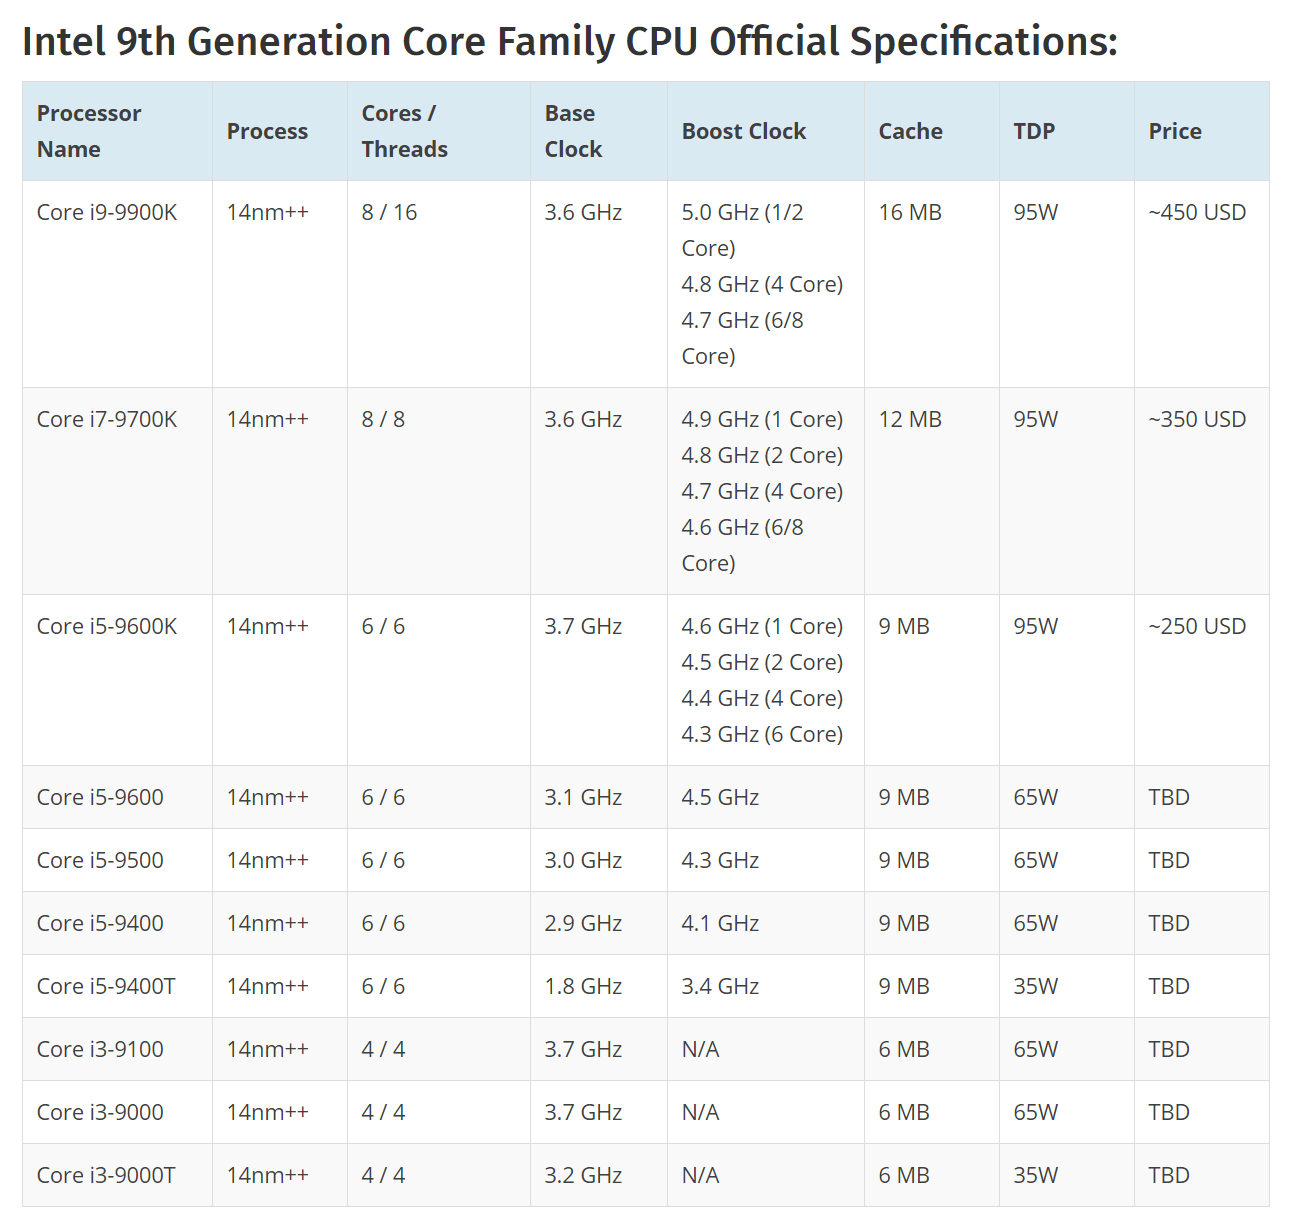 Intel is preparing to launch 9th Gen core desktop processor